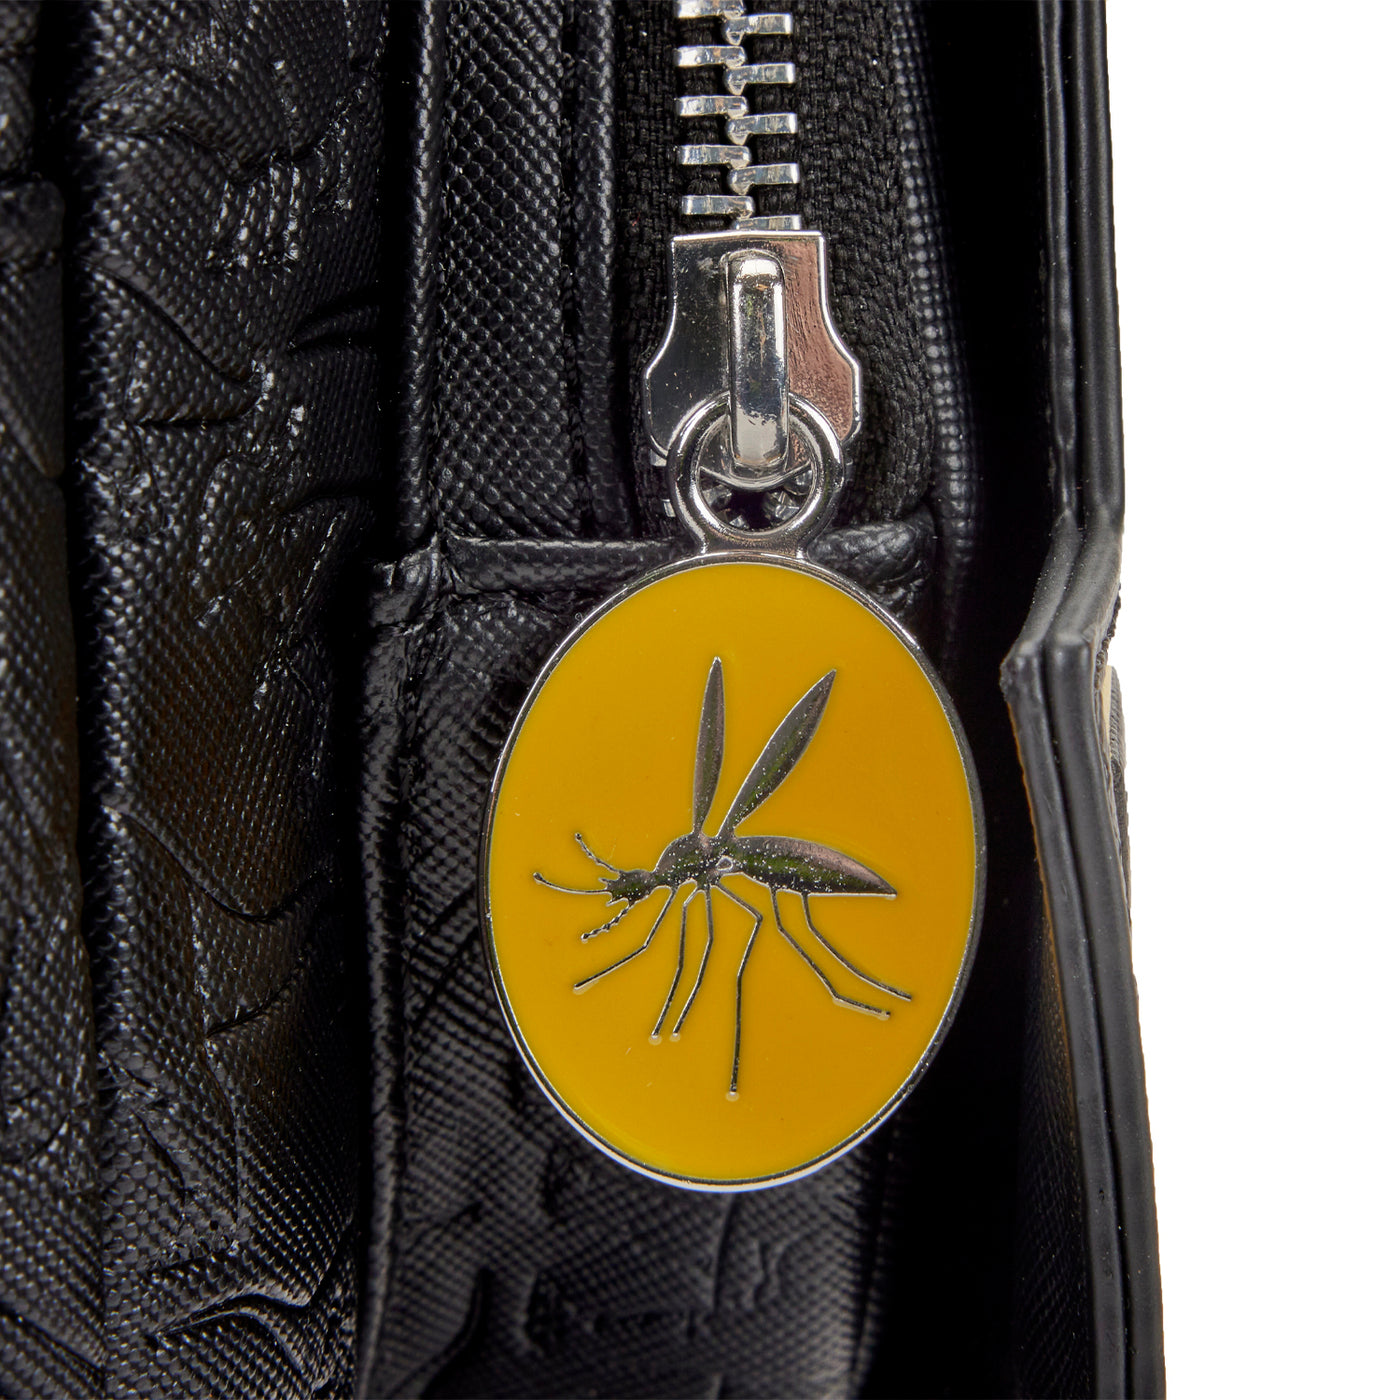 Loungefly Jurassic Park Logo Mini Backpack